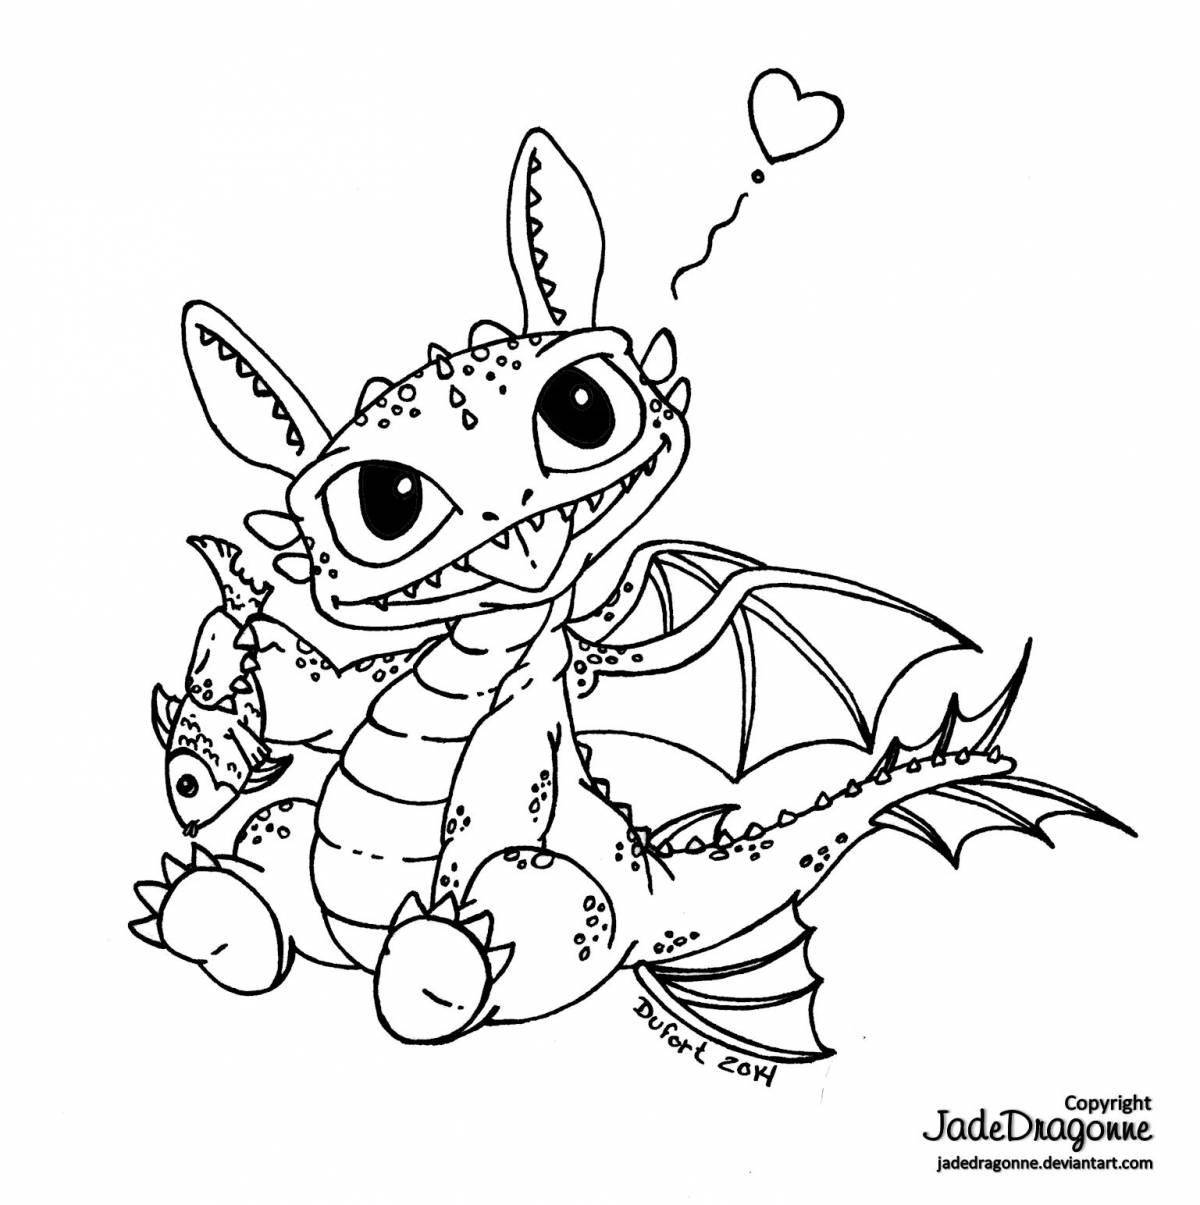 Fabulous cute dragon coloring book